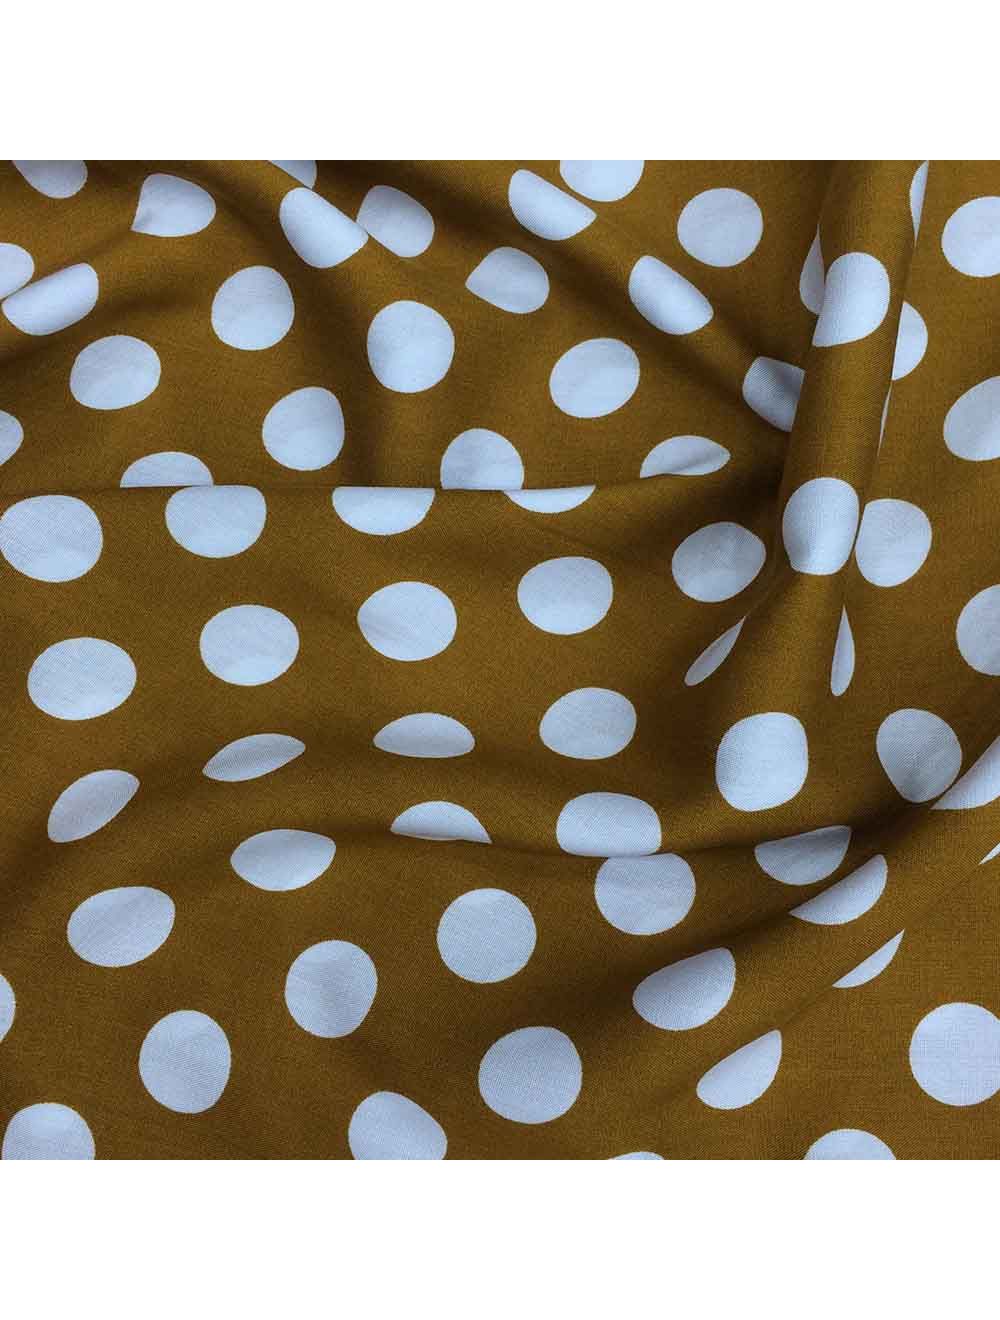 Brown Polka Dots Print Rayon Cotton Fabric